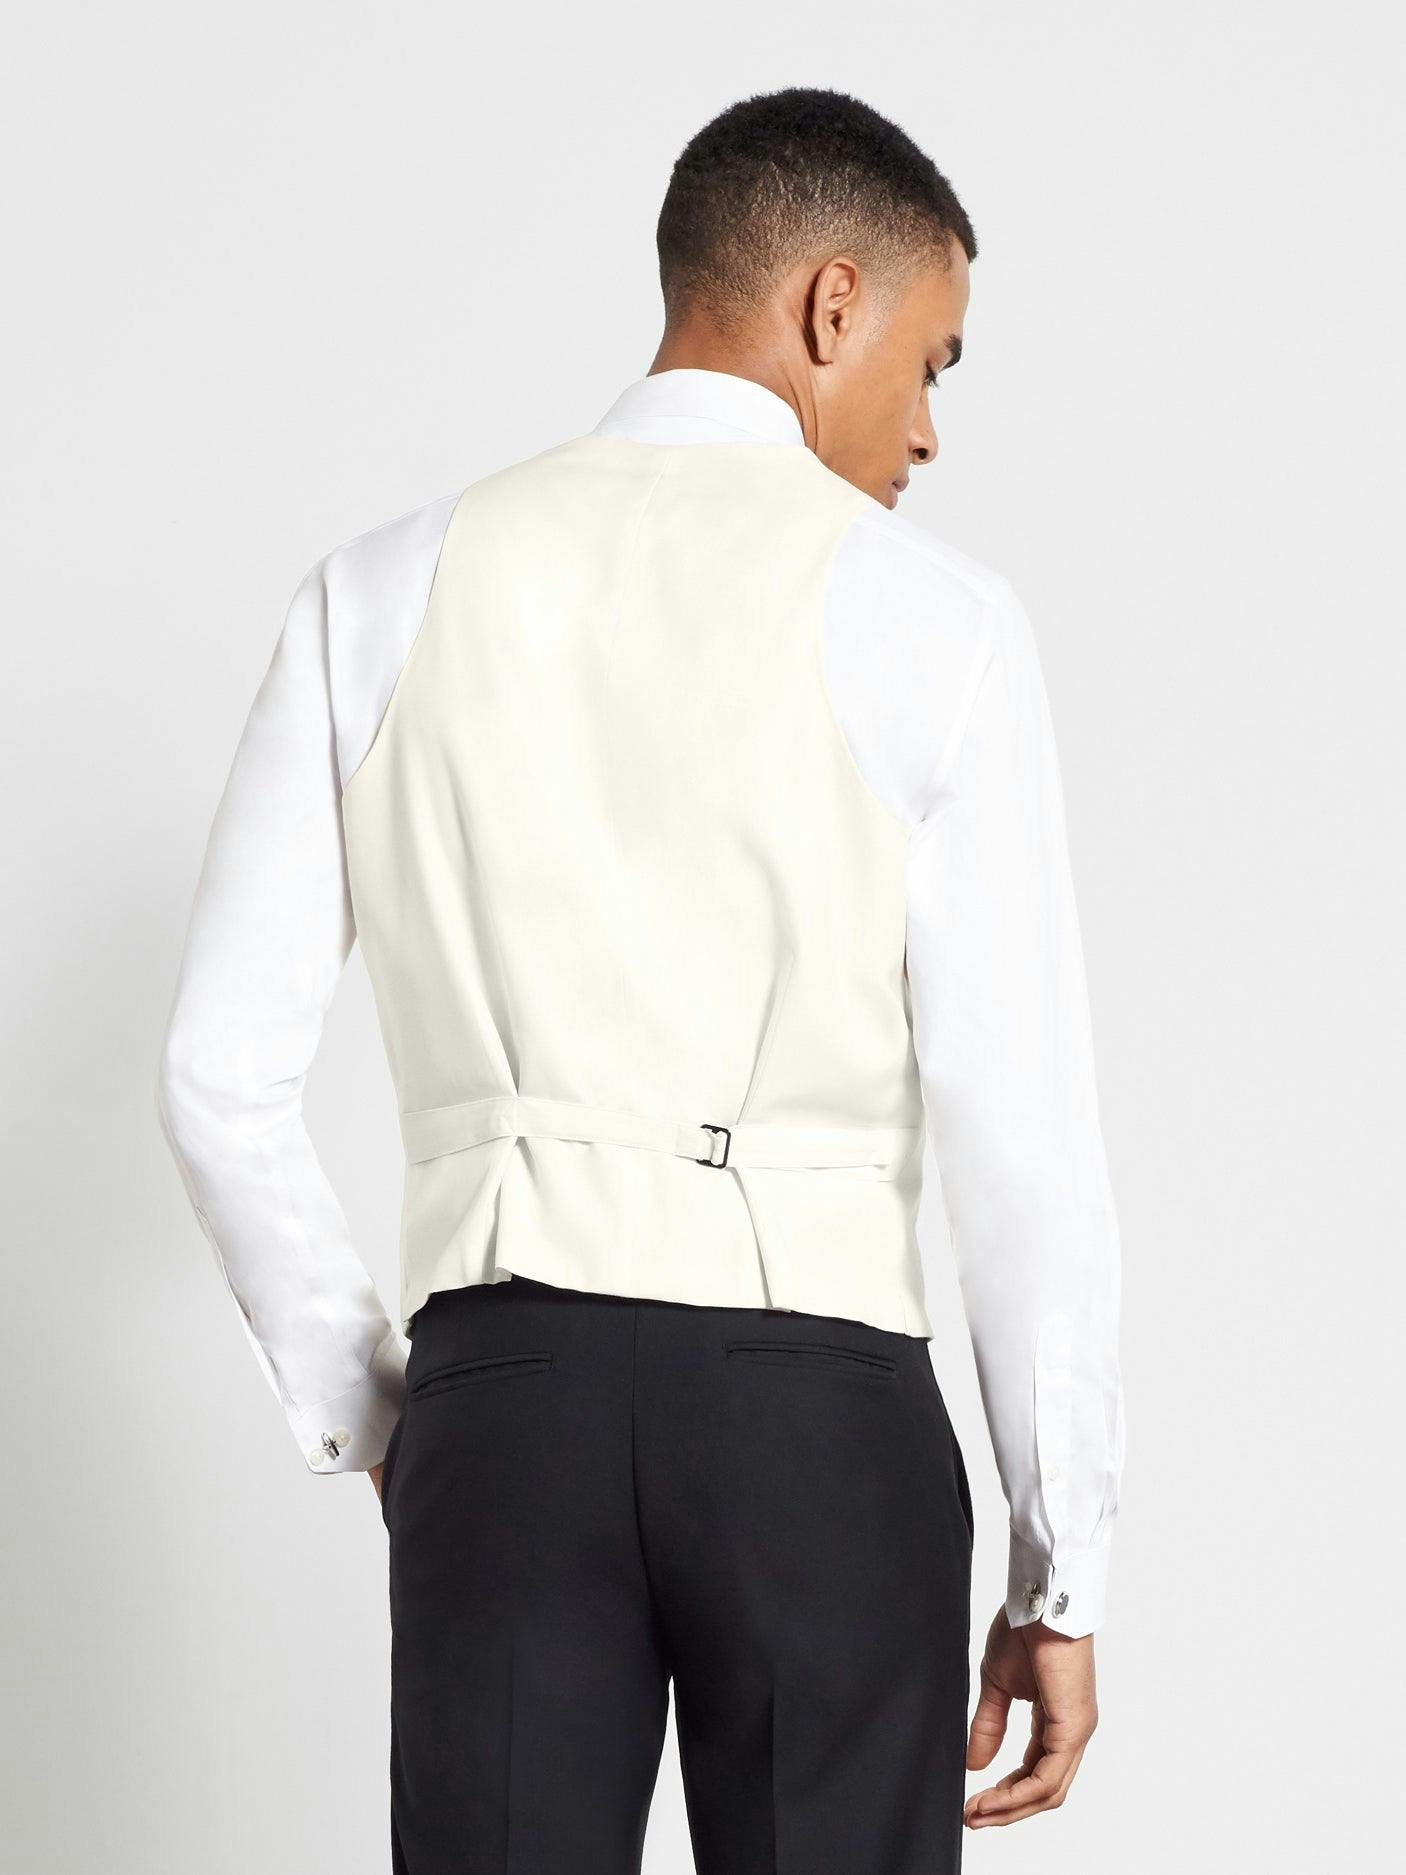 Ivory Low Cut Tuxedo Vest